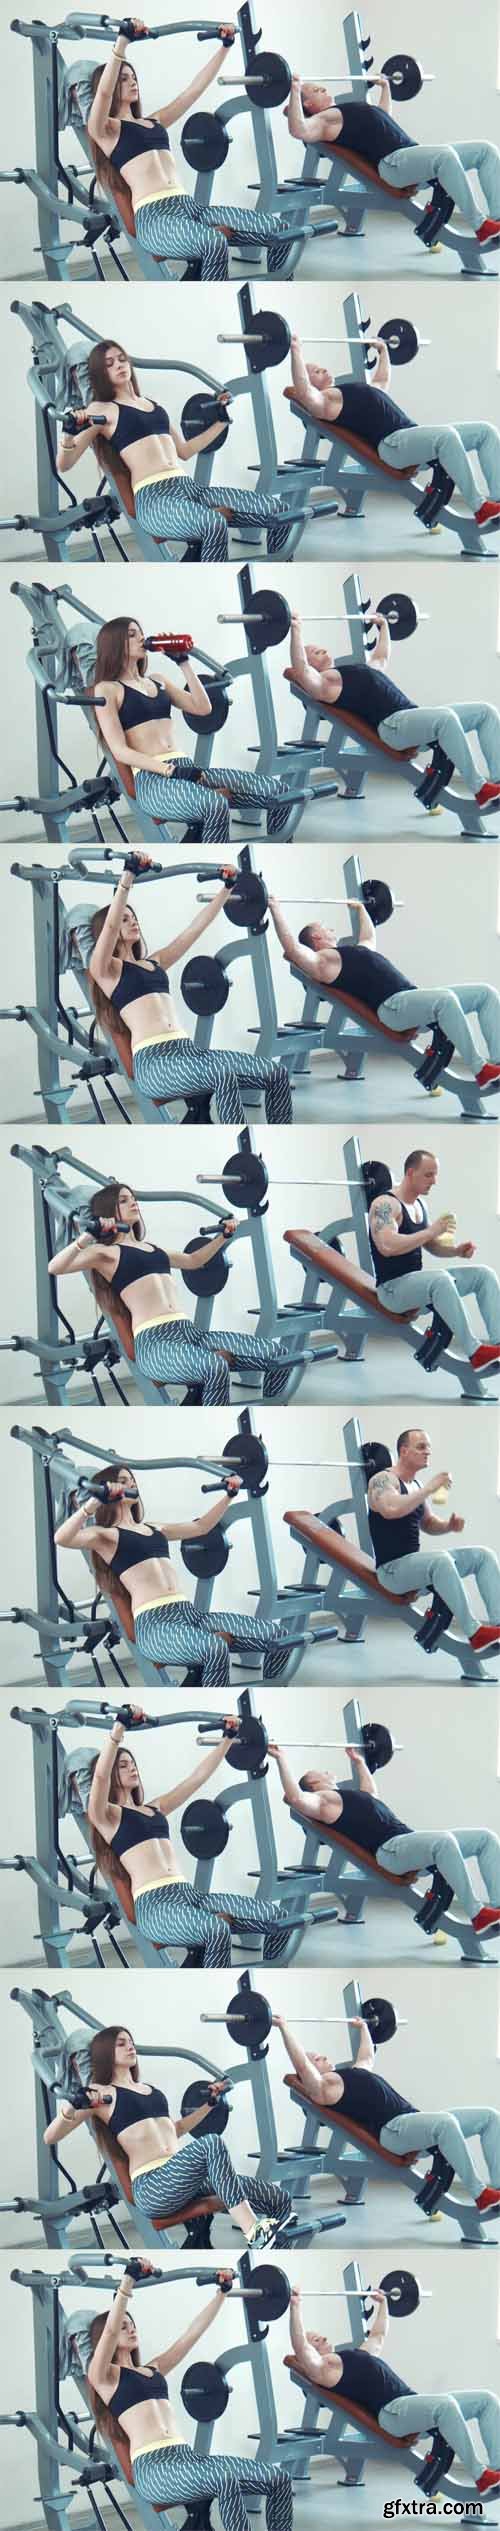 Brunette sportswoman and muscular man doing chest exercise